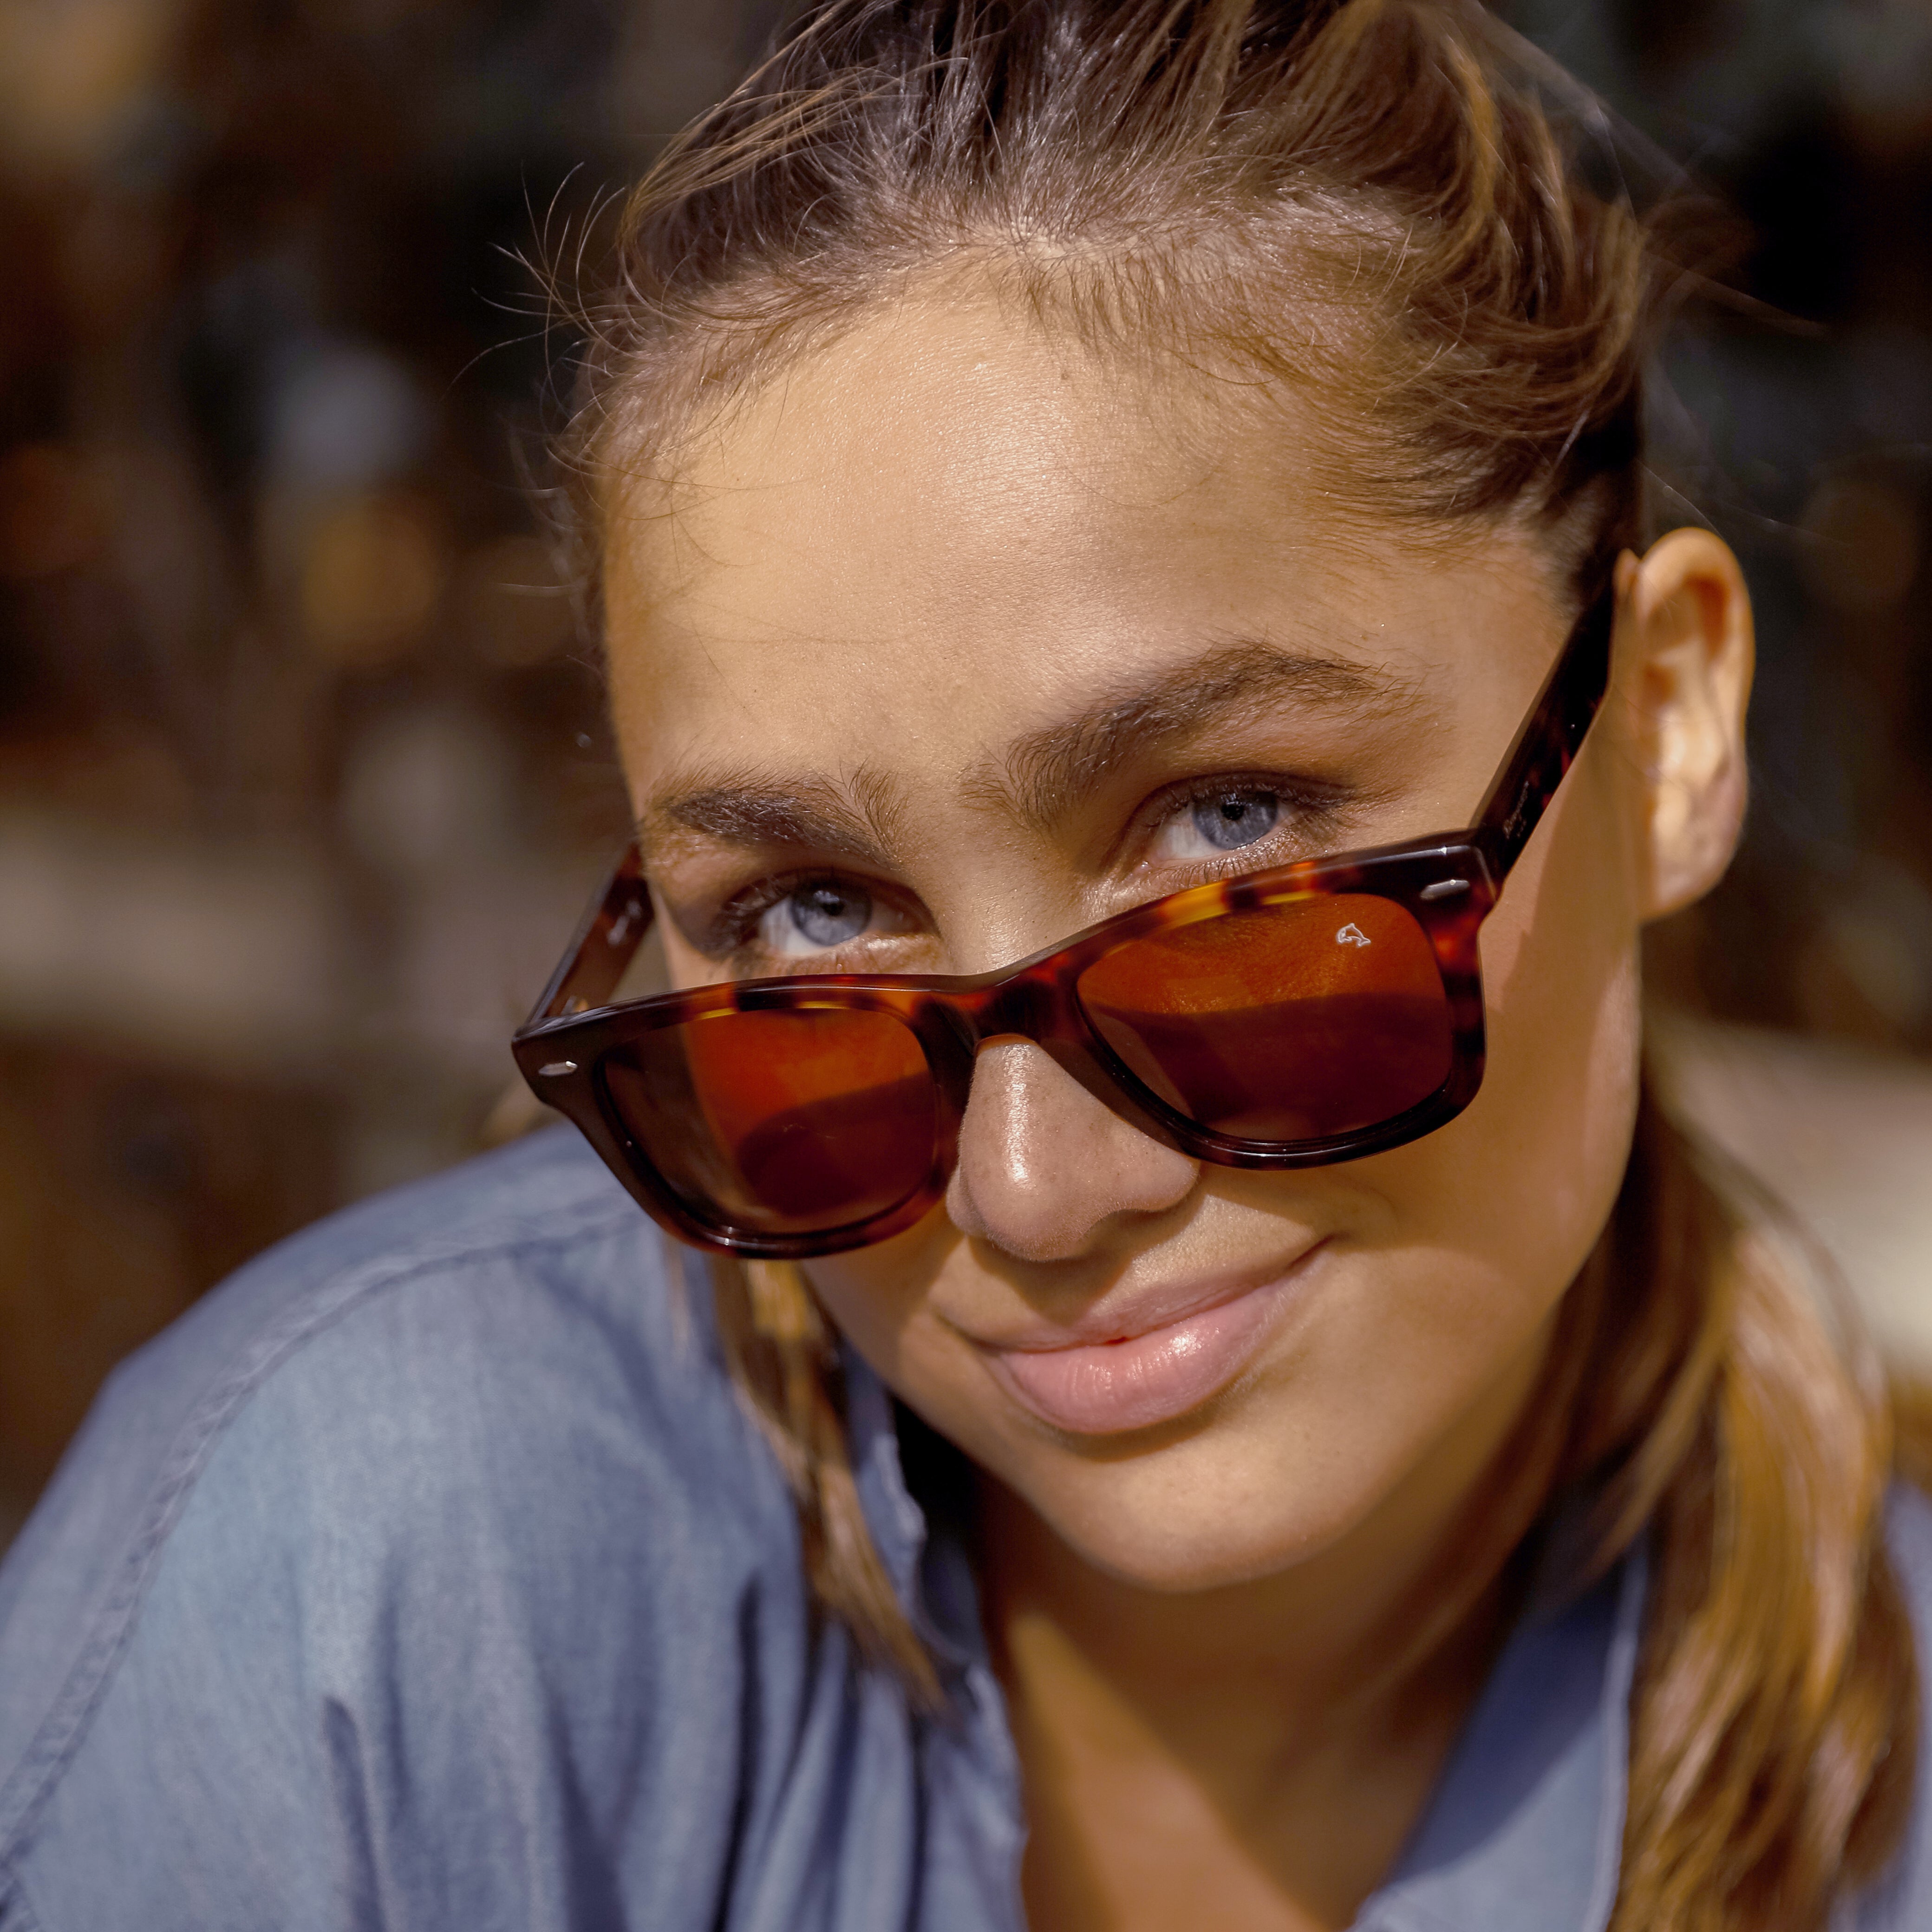 Biscayners Sunglasses |  Heather Tortoise